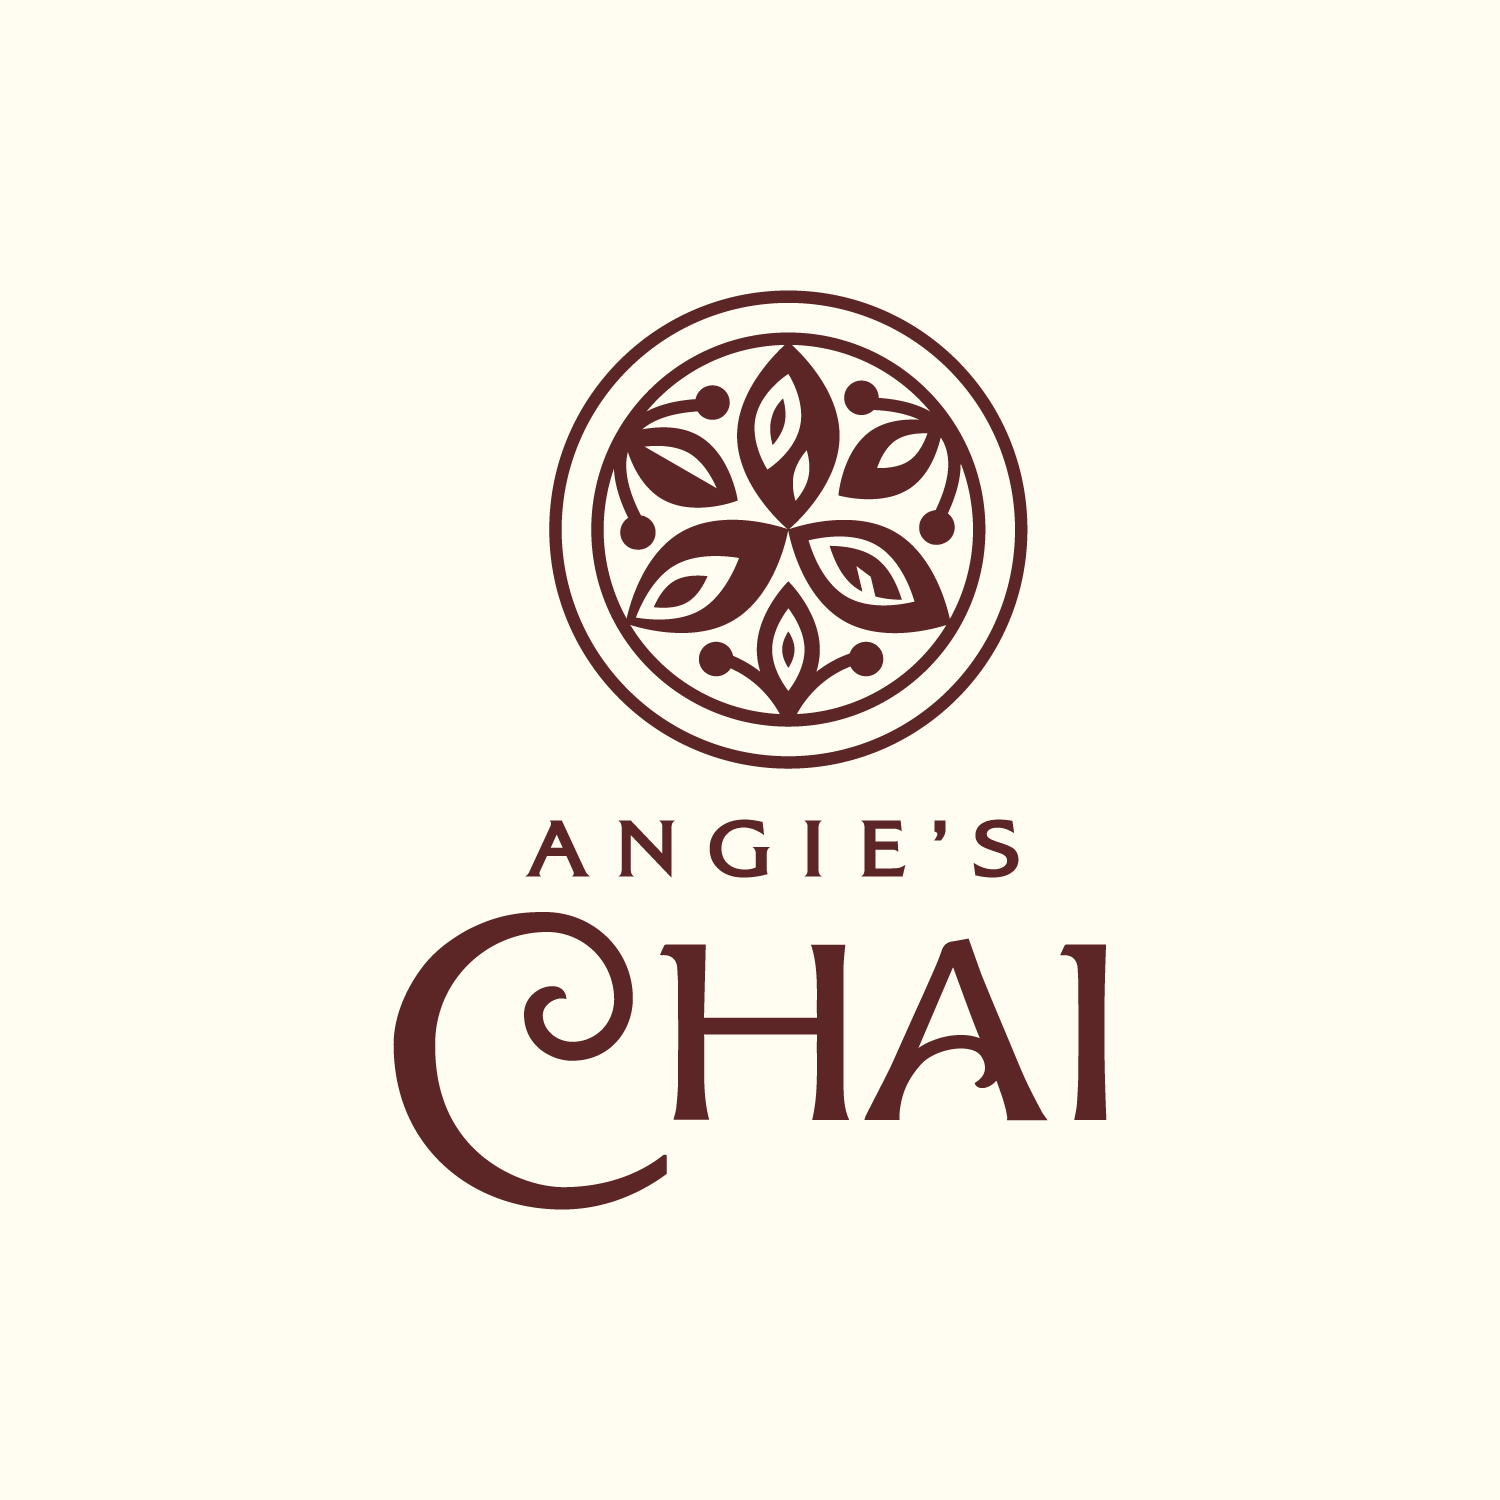 Angies-Chai-logo2.png